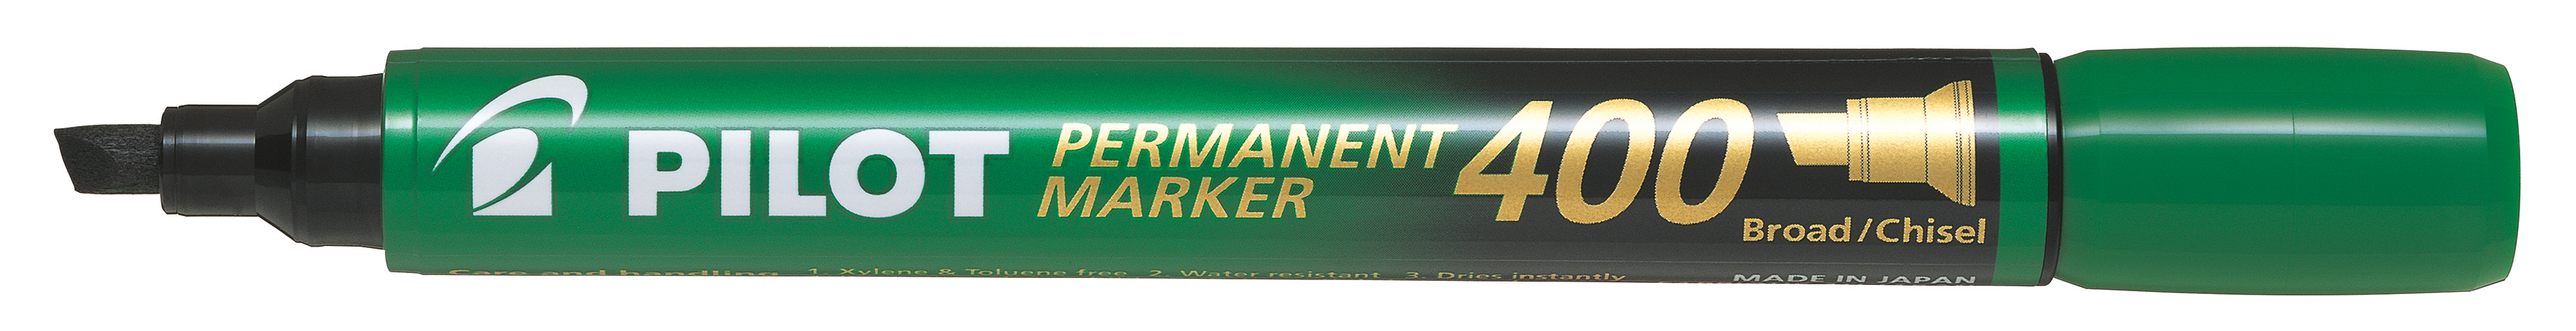 PILOT Permanent Marker 400 4mm SCA-400-G pointe de Wedge vert